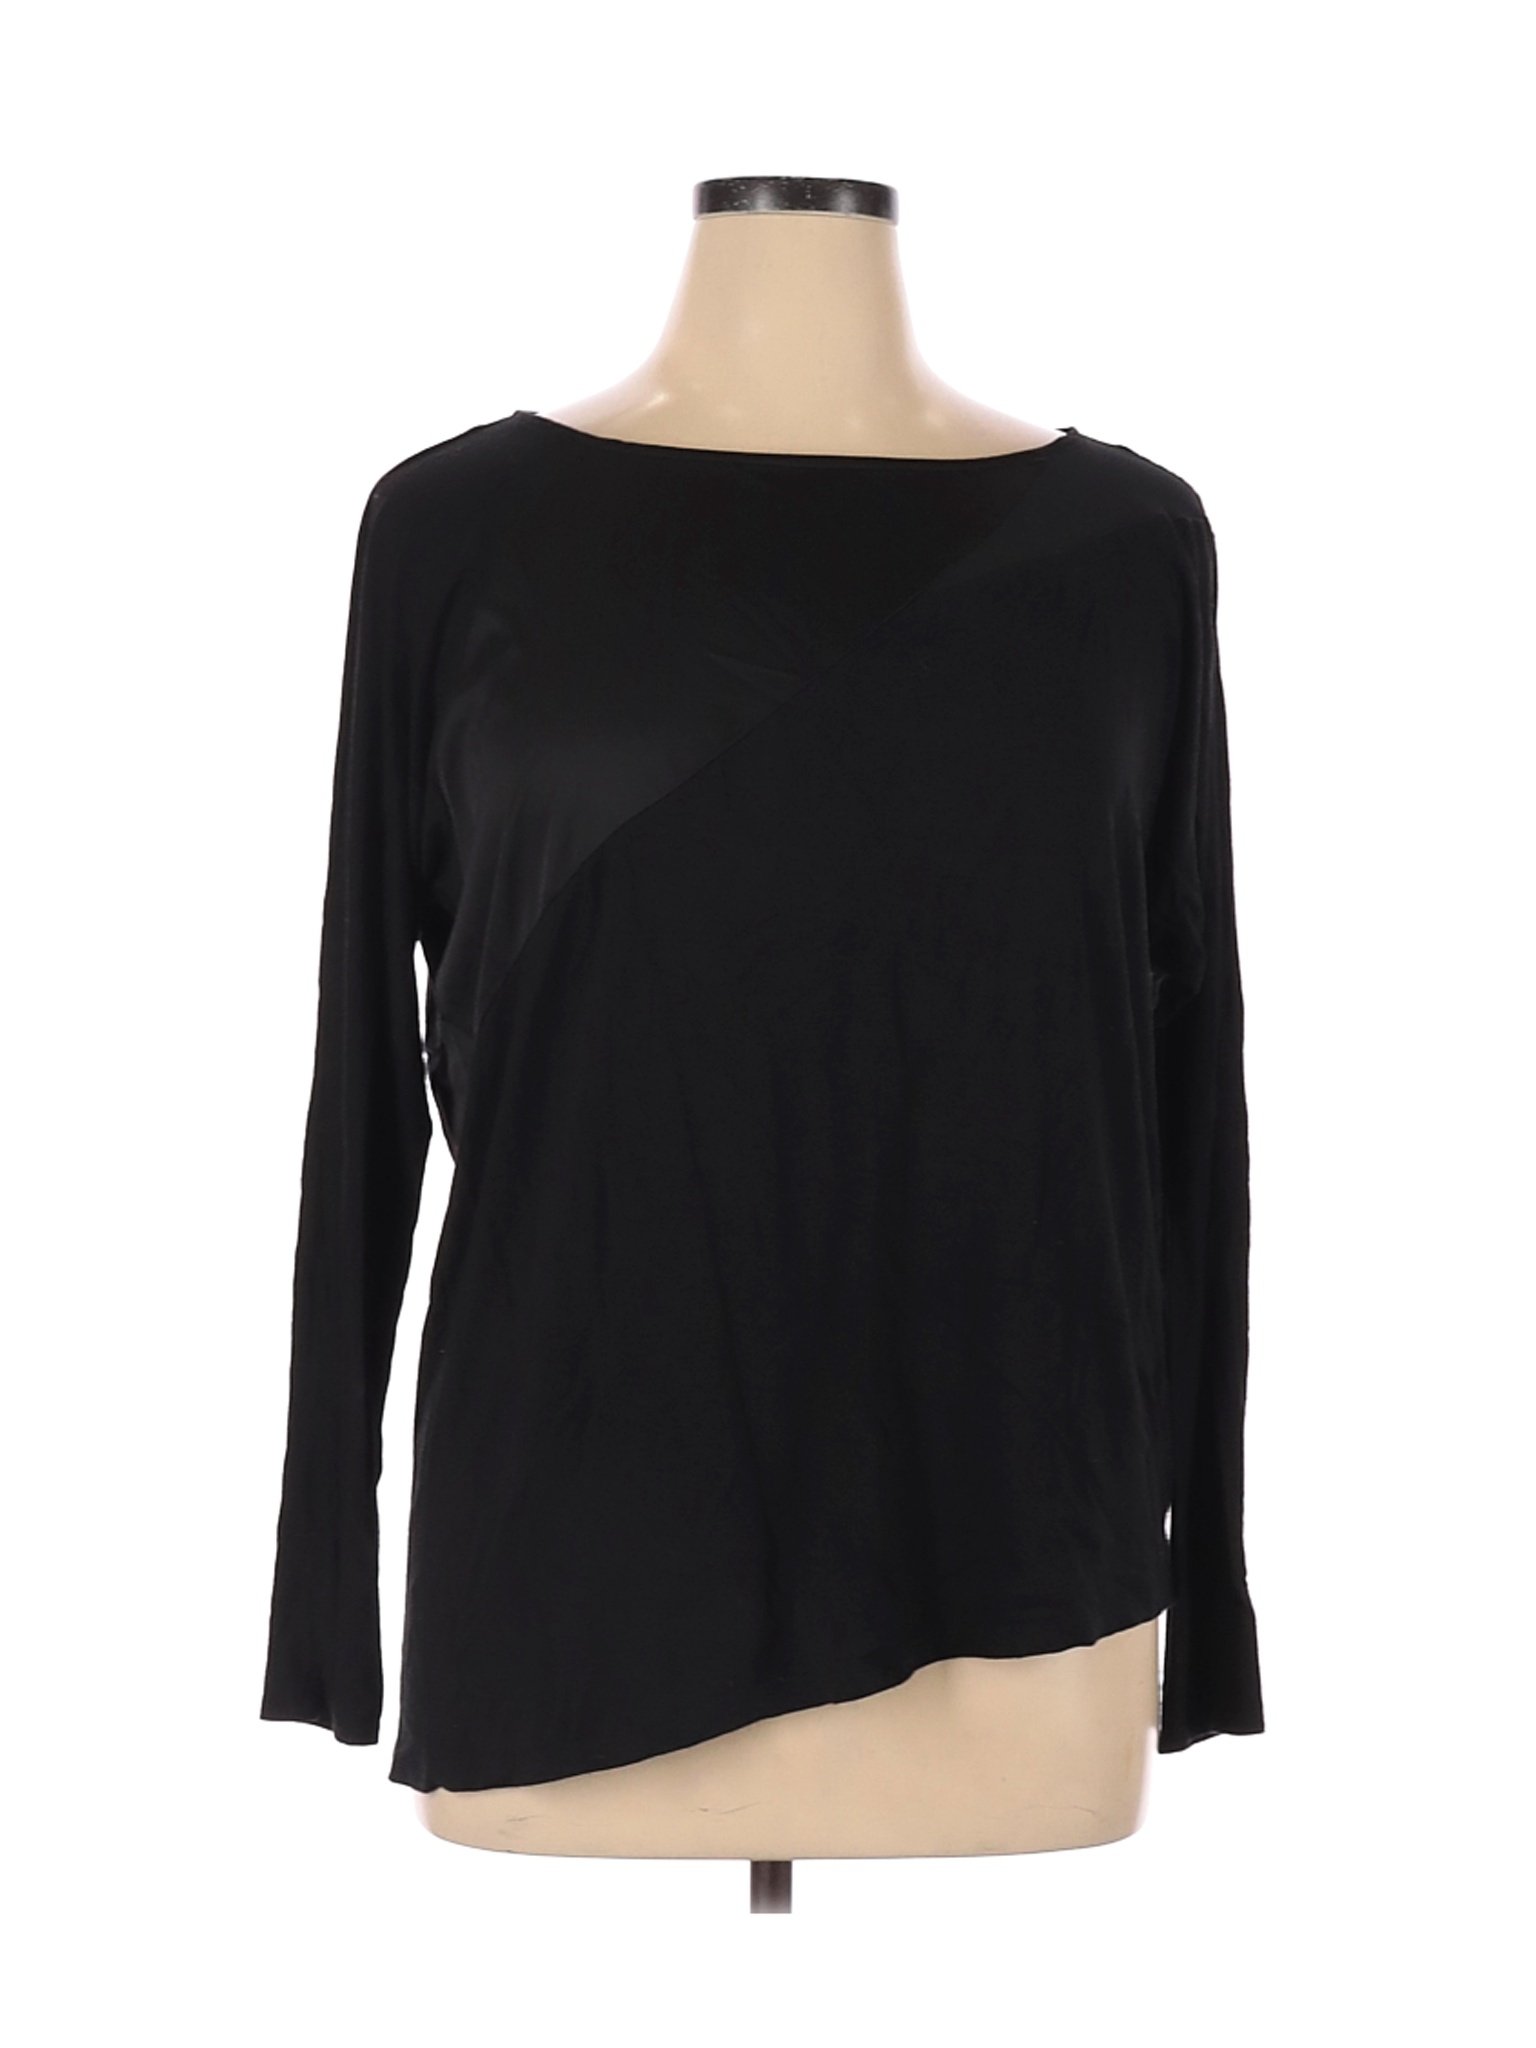 DKNYC Women Black Long Sleeve Top XL | eBay